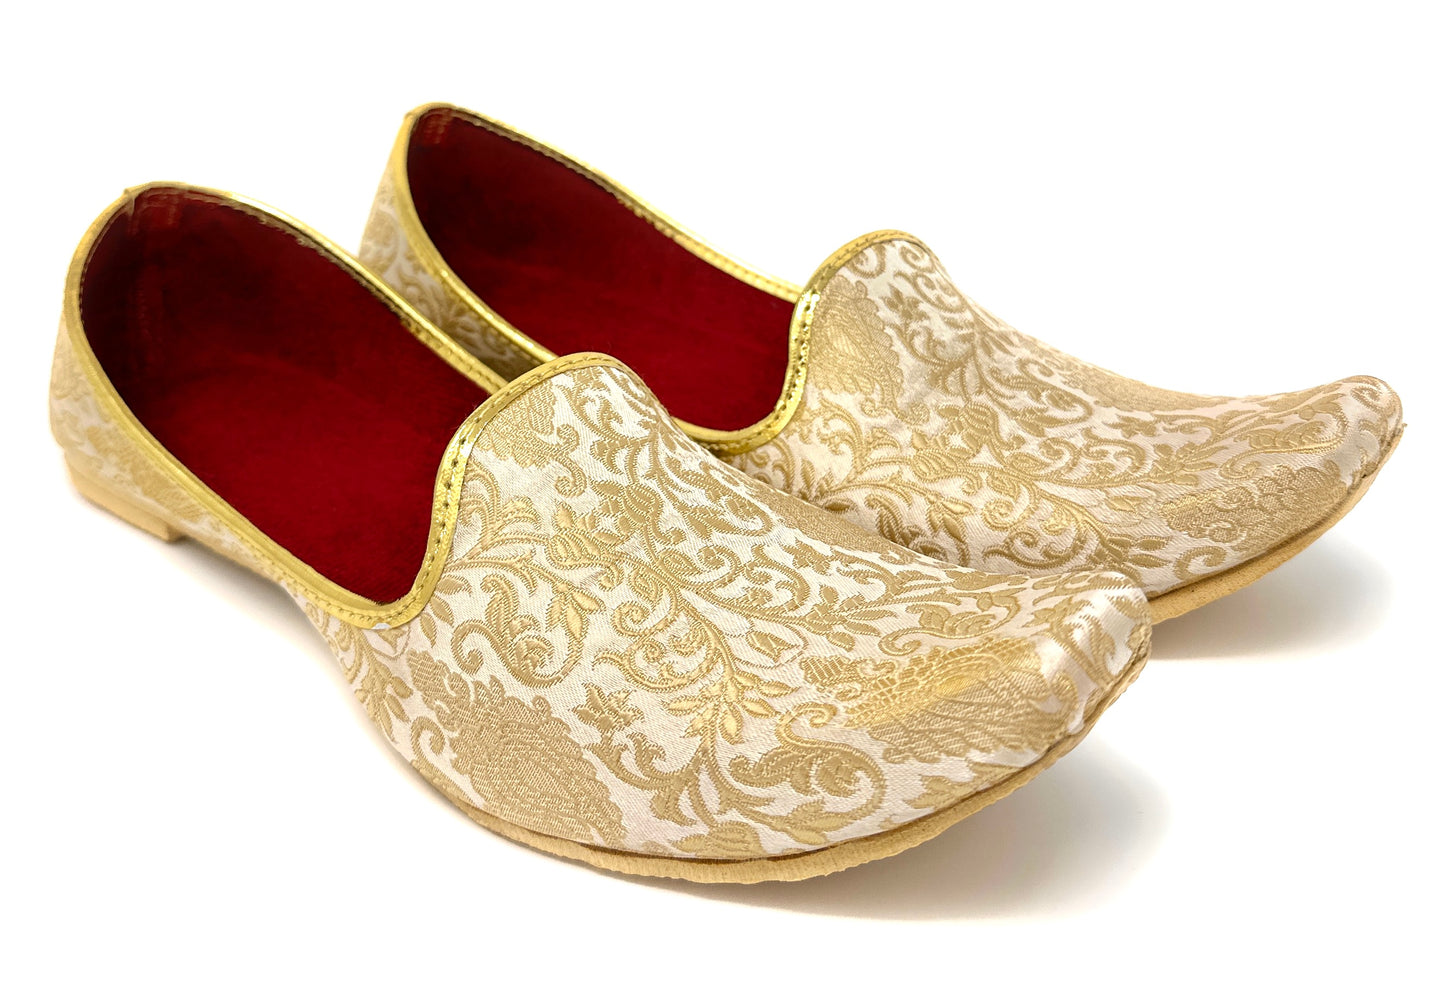 BombayFlow SRK Punjabi Jutti Gold Shoes Flats Handmade - Khussa Shoes Jutti - Indian Wedding, Mojari Shoes, Sherwani Kurta, Indian Bridal Shoes